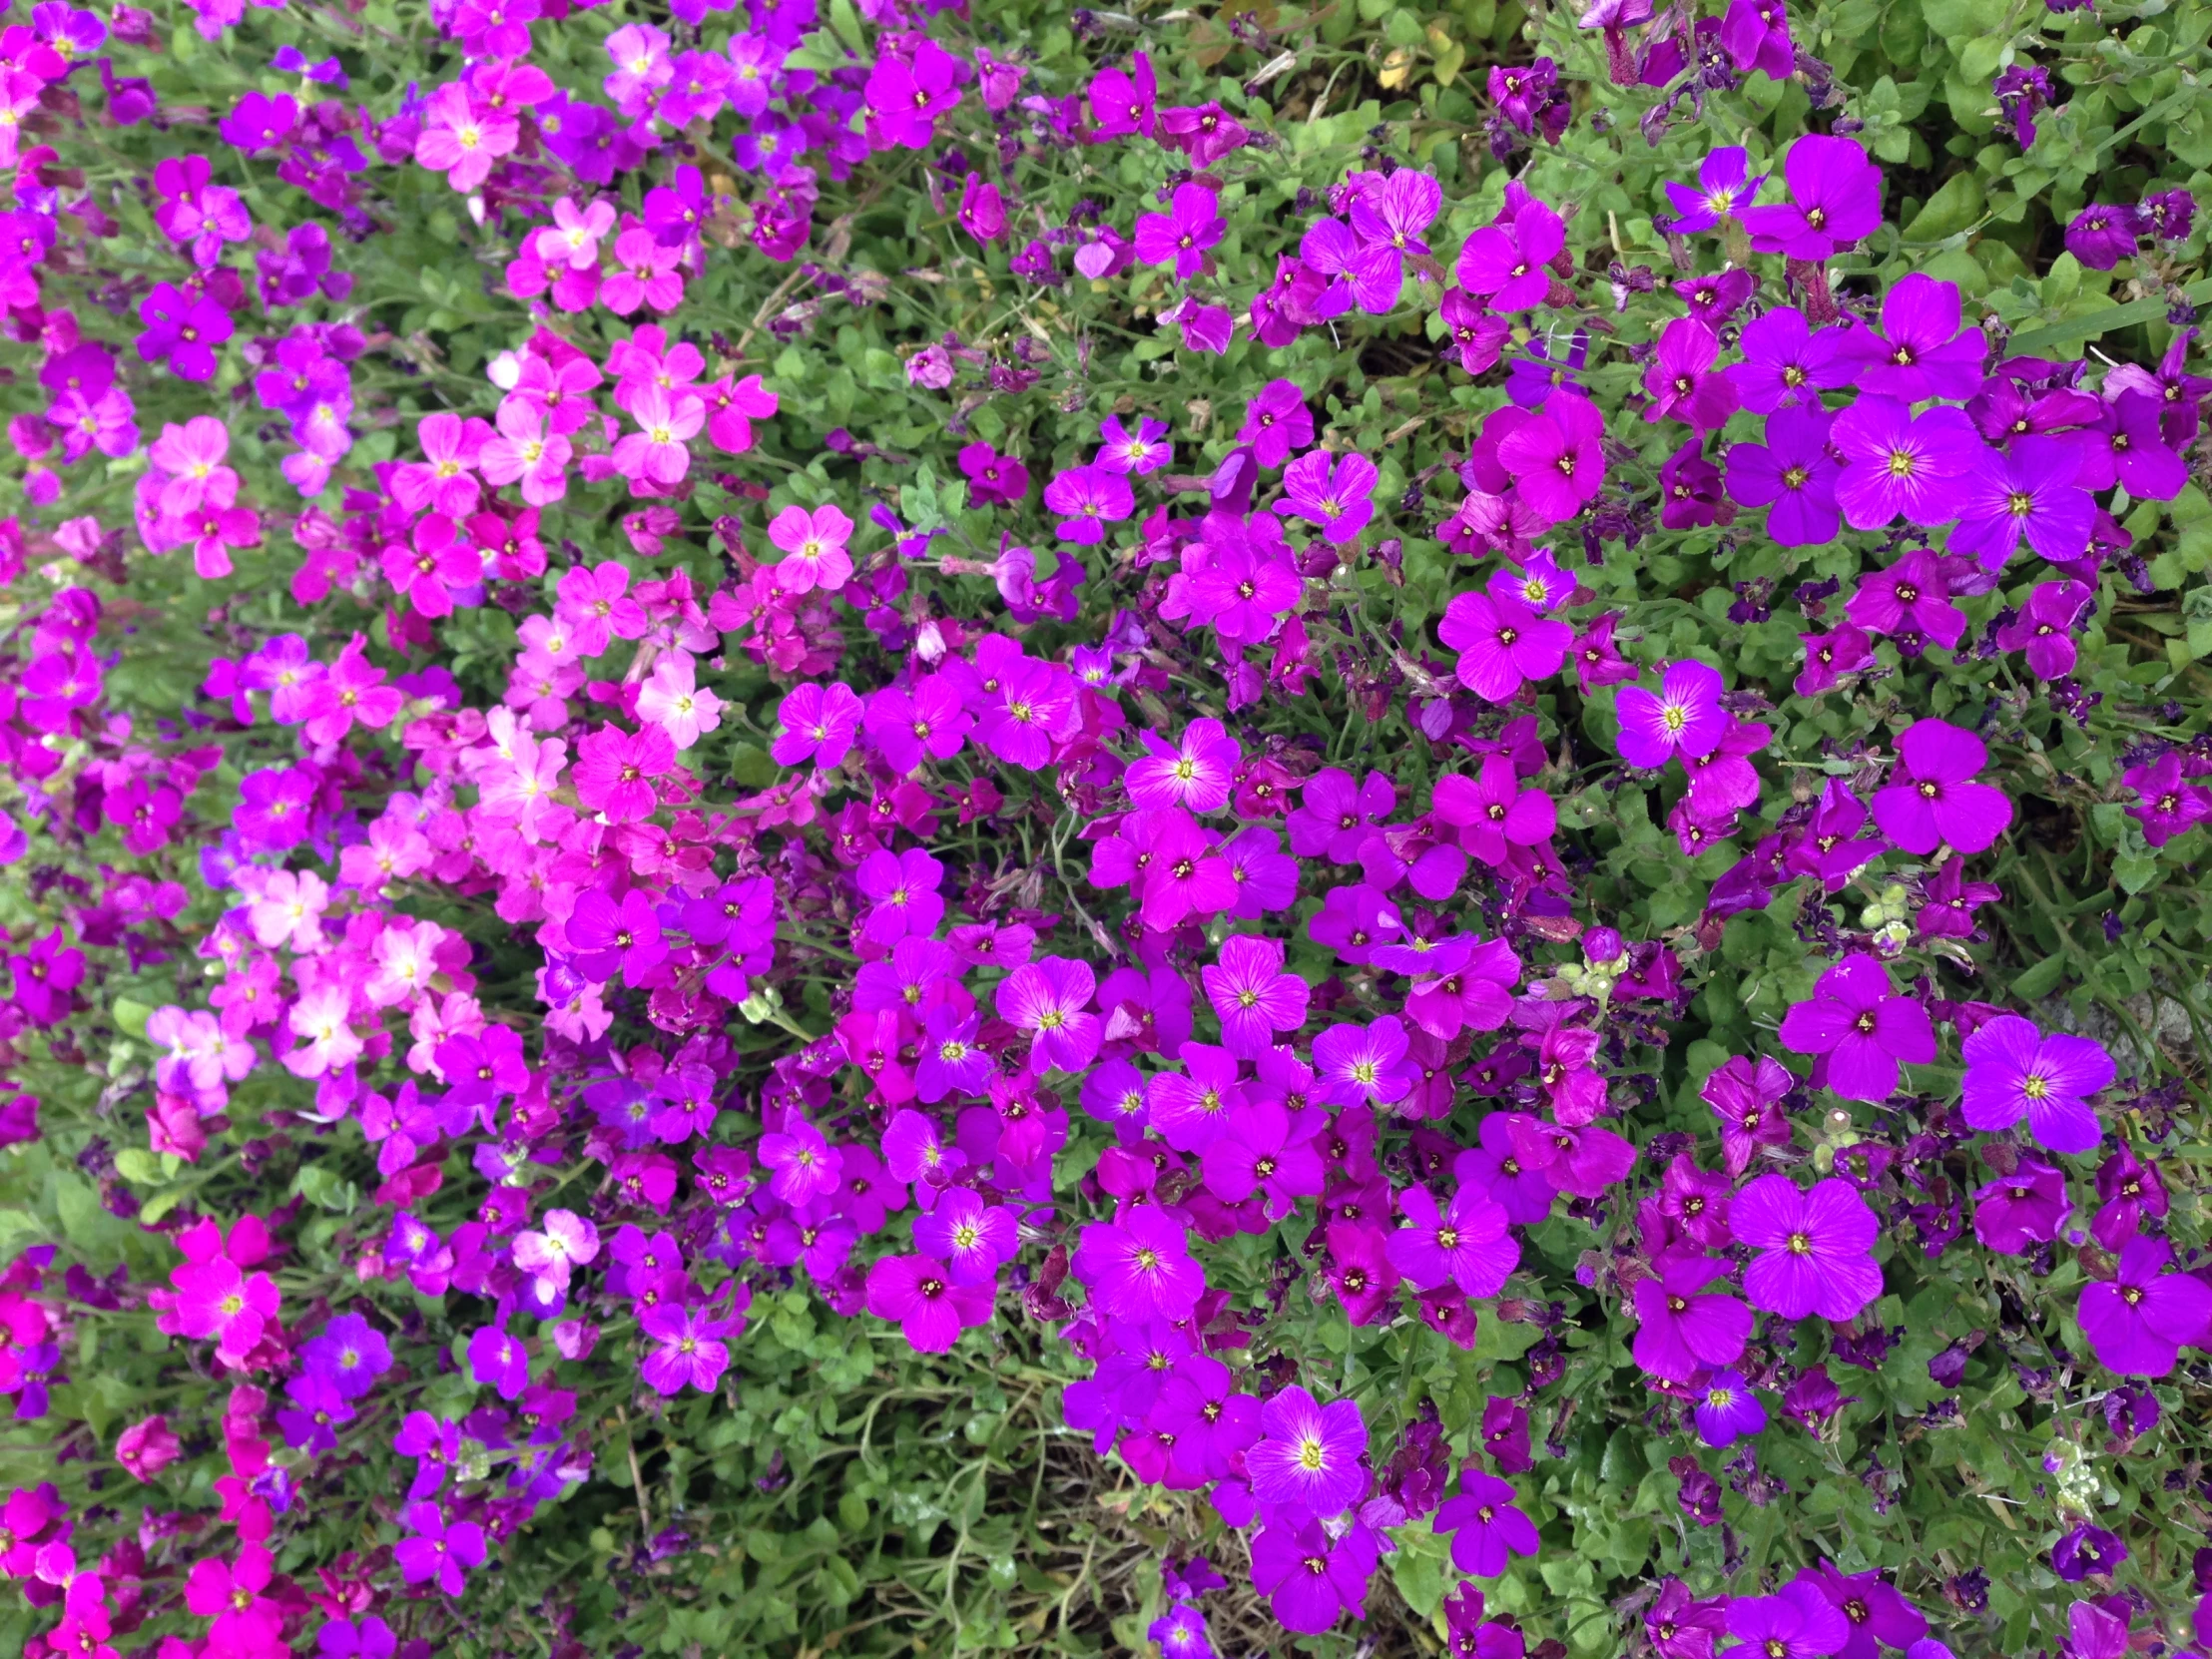 many purple flowers are growing in a field